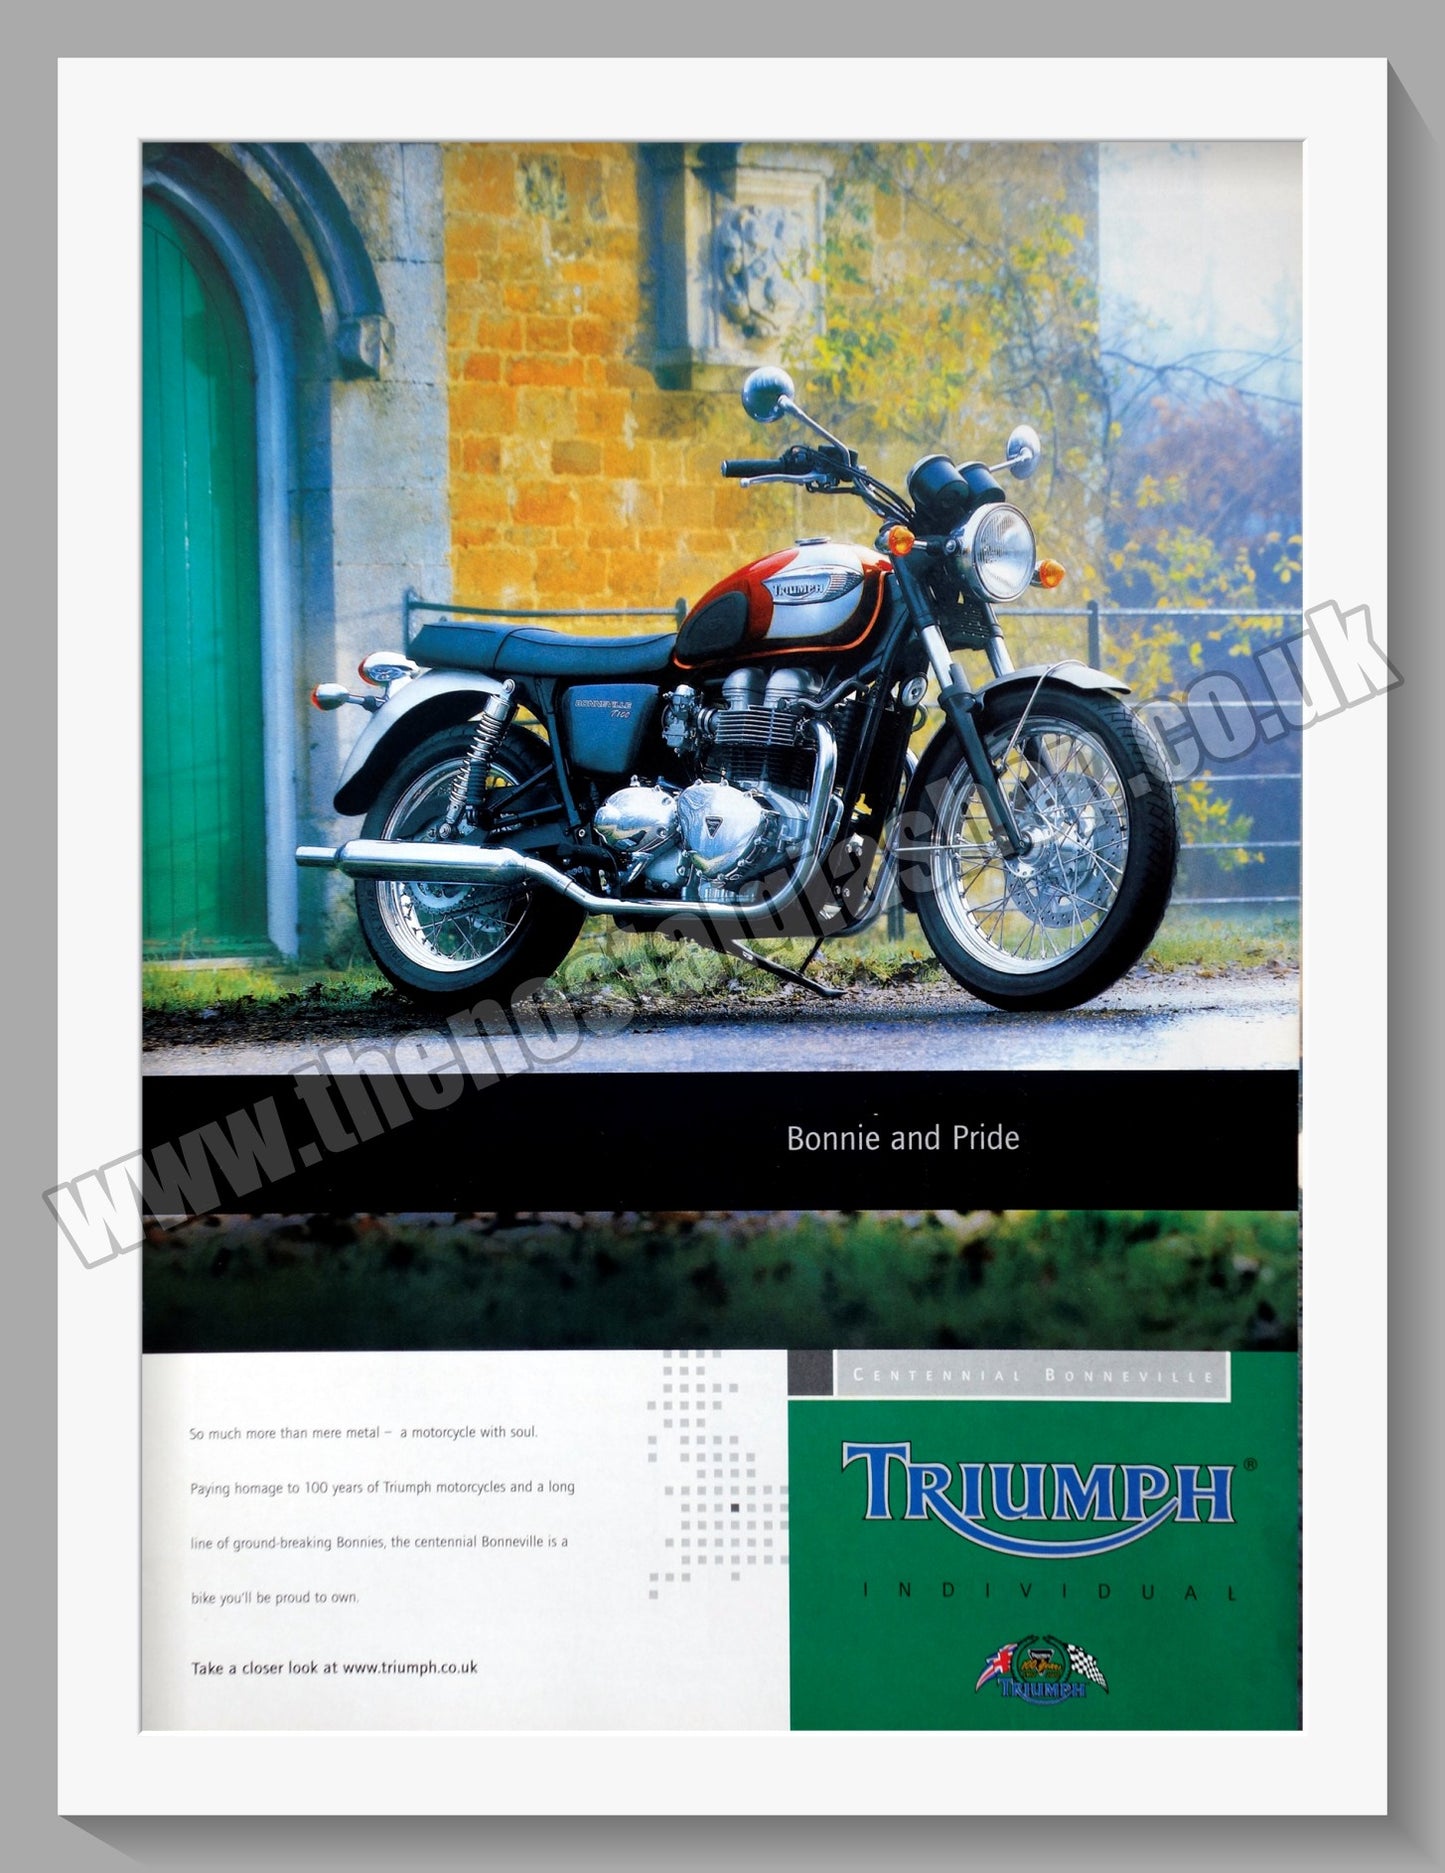 Triumph Centennial Bonneville Motorcycle. Original advert 2002 (ref AD57893)